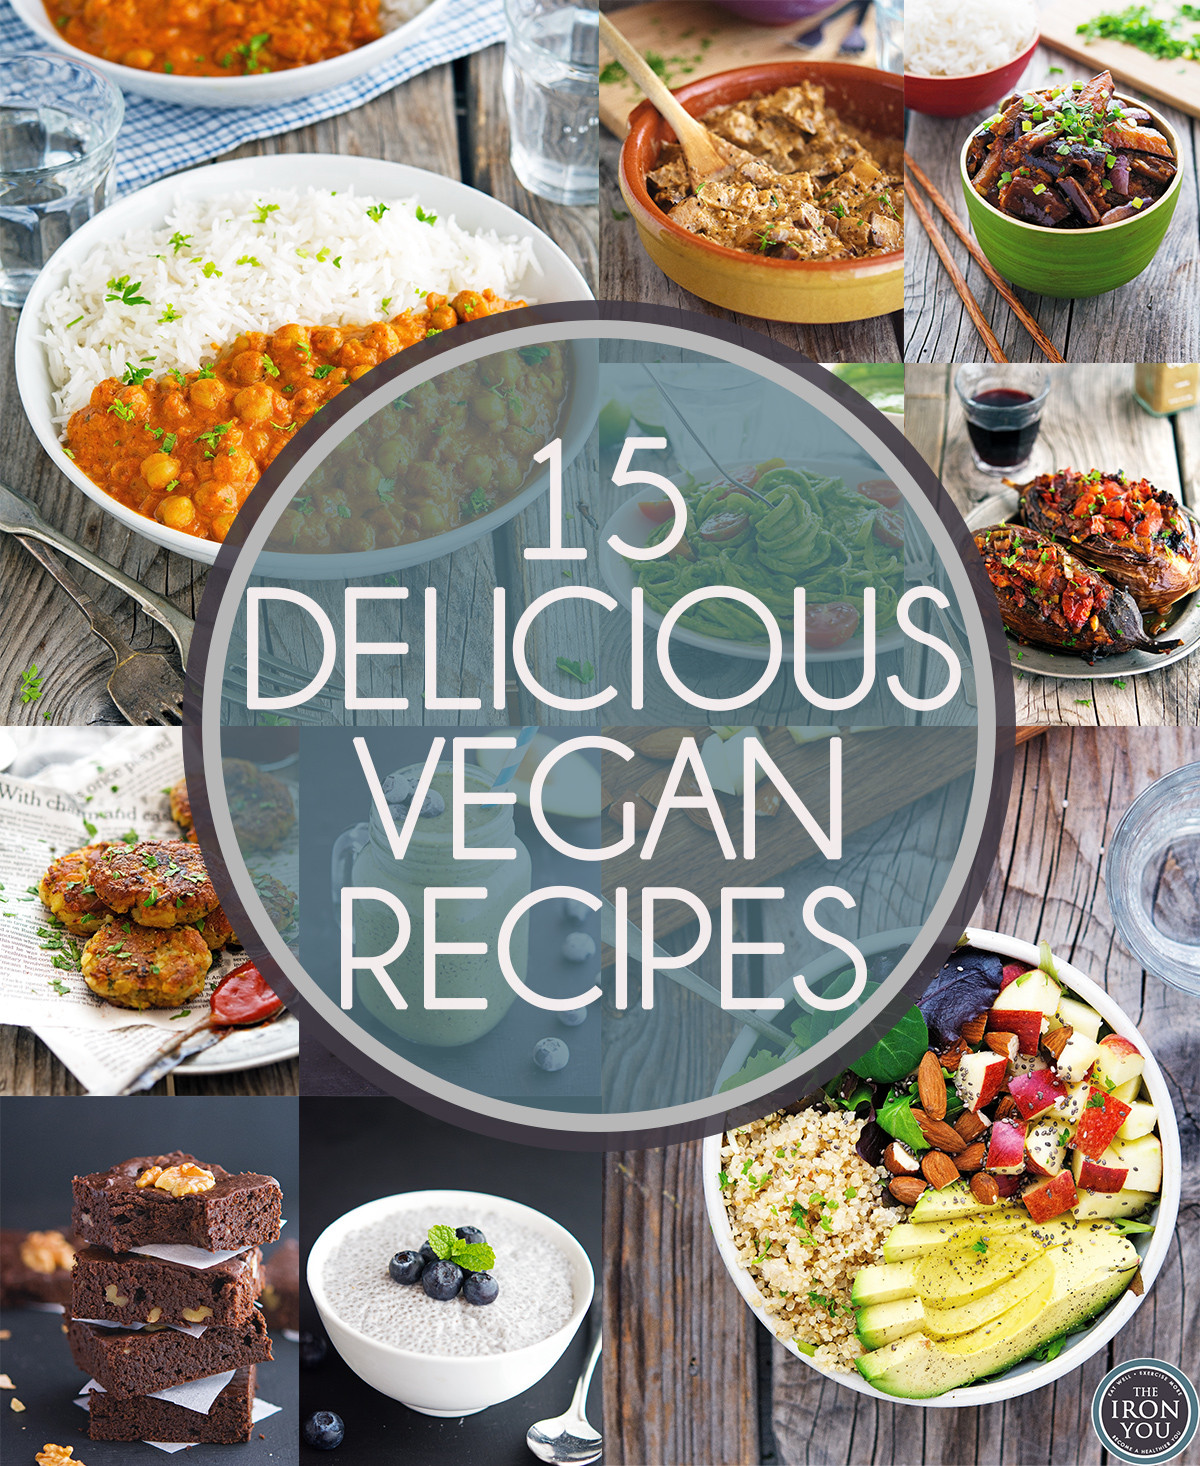 Favorite Vegan Recipes
 The Iron You 15 Delicious Vegan Recipes